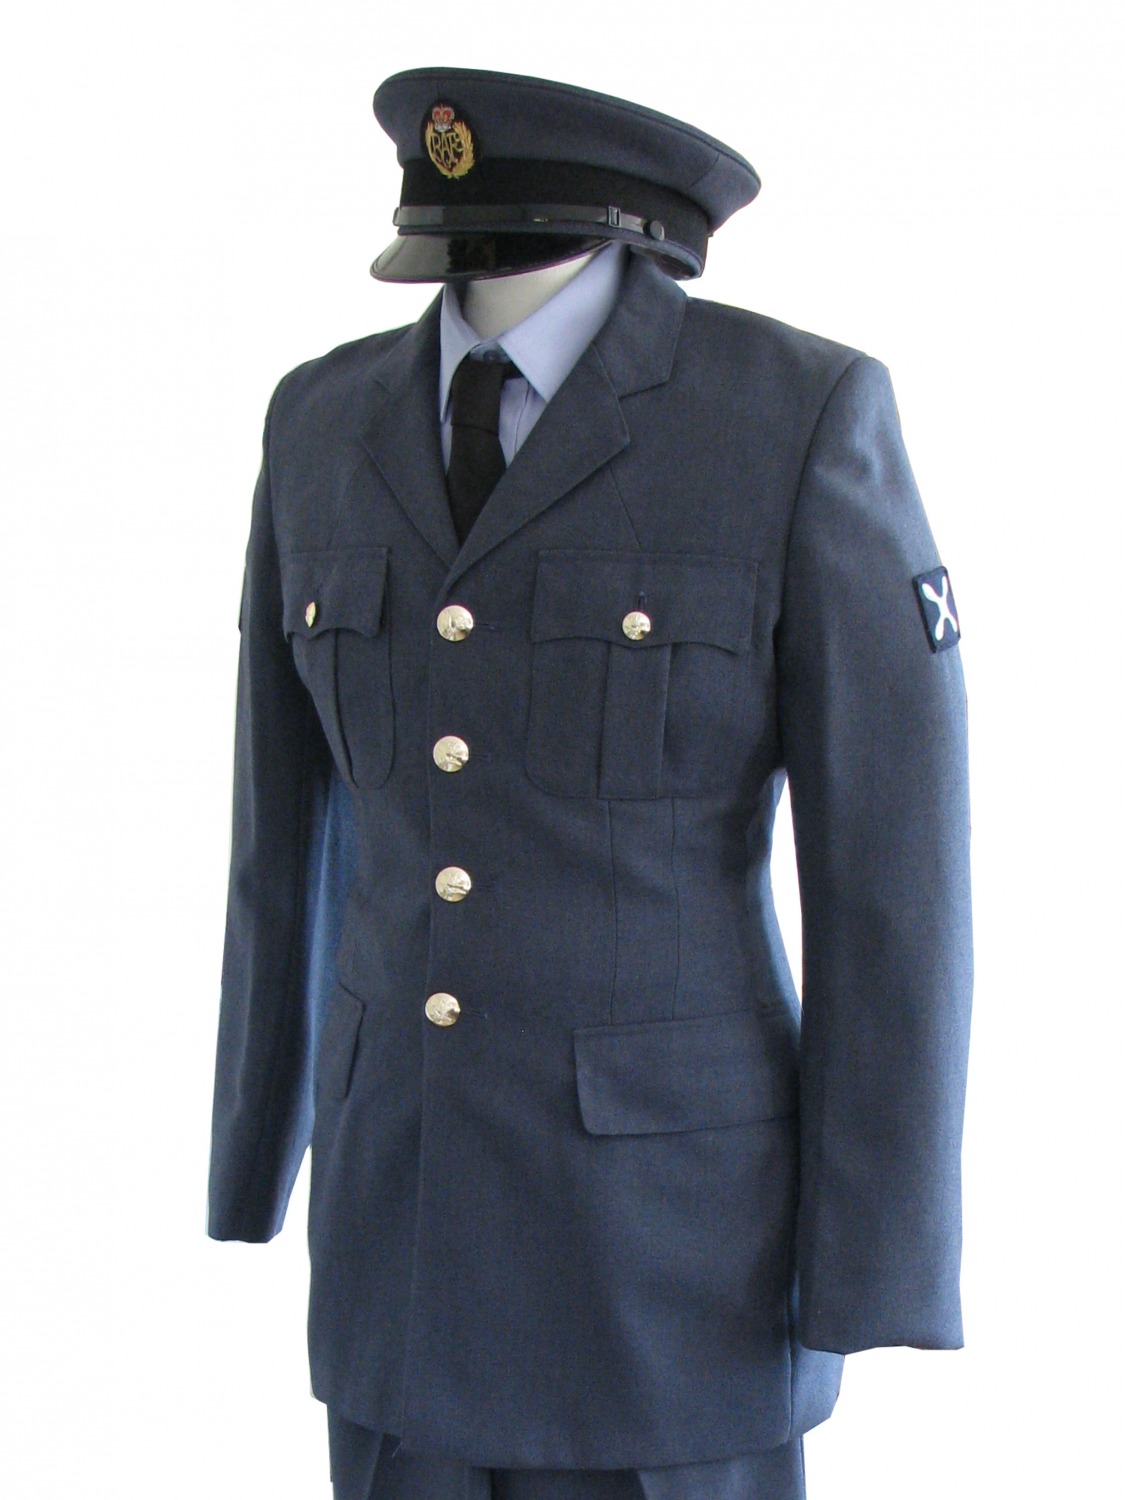 Men's 1940s Wartime RAF Uniform Jacket Chest 38" Image